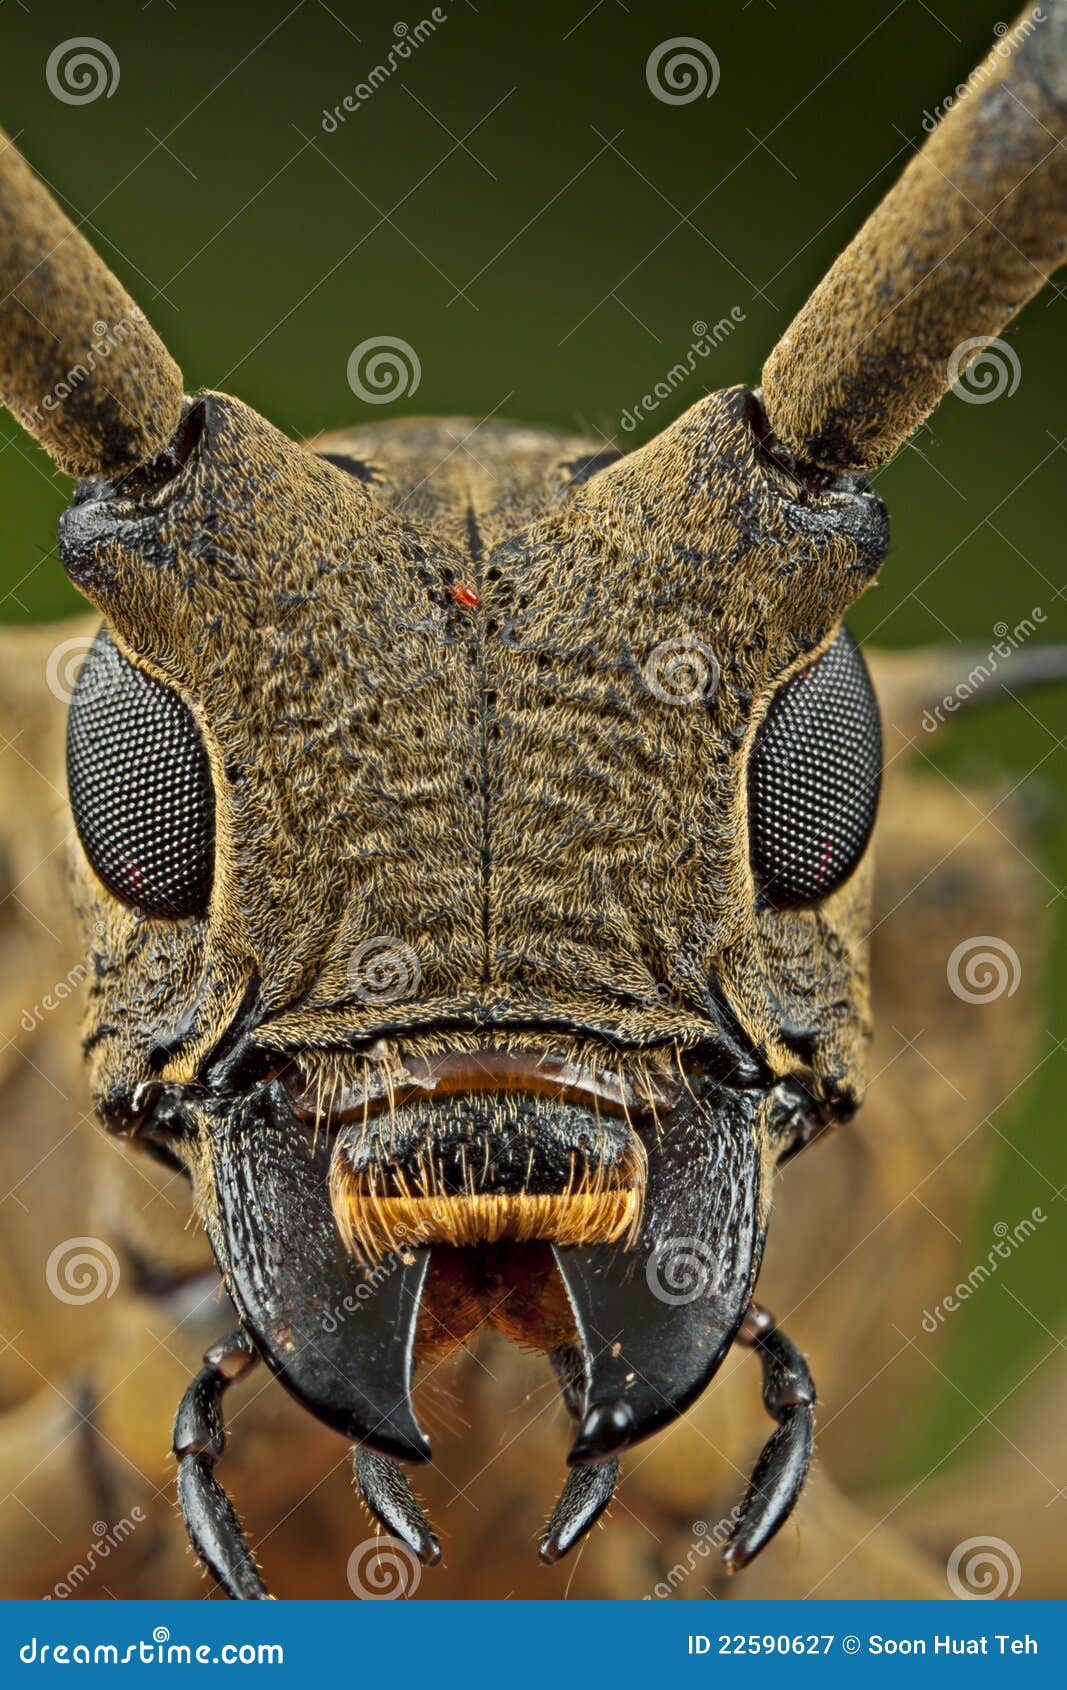 Single horned beetle